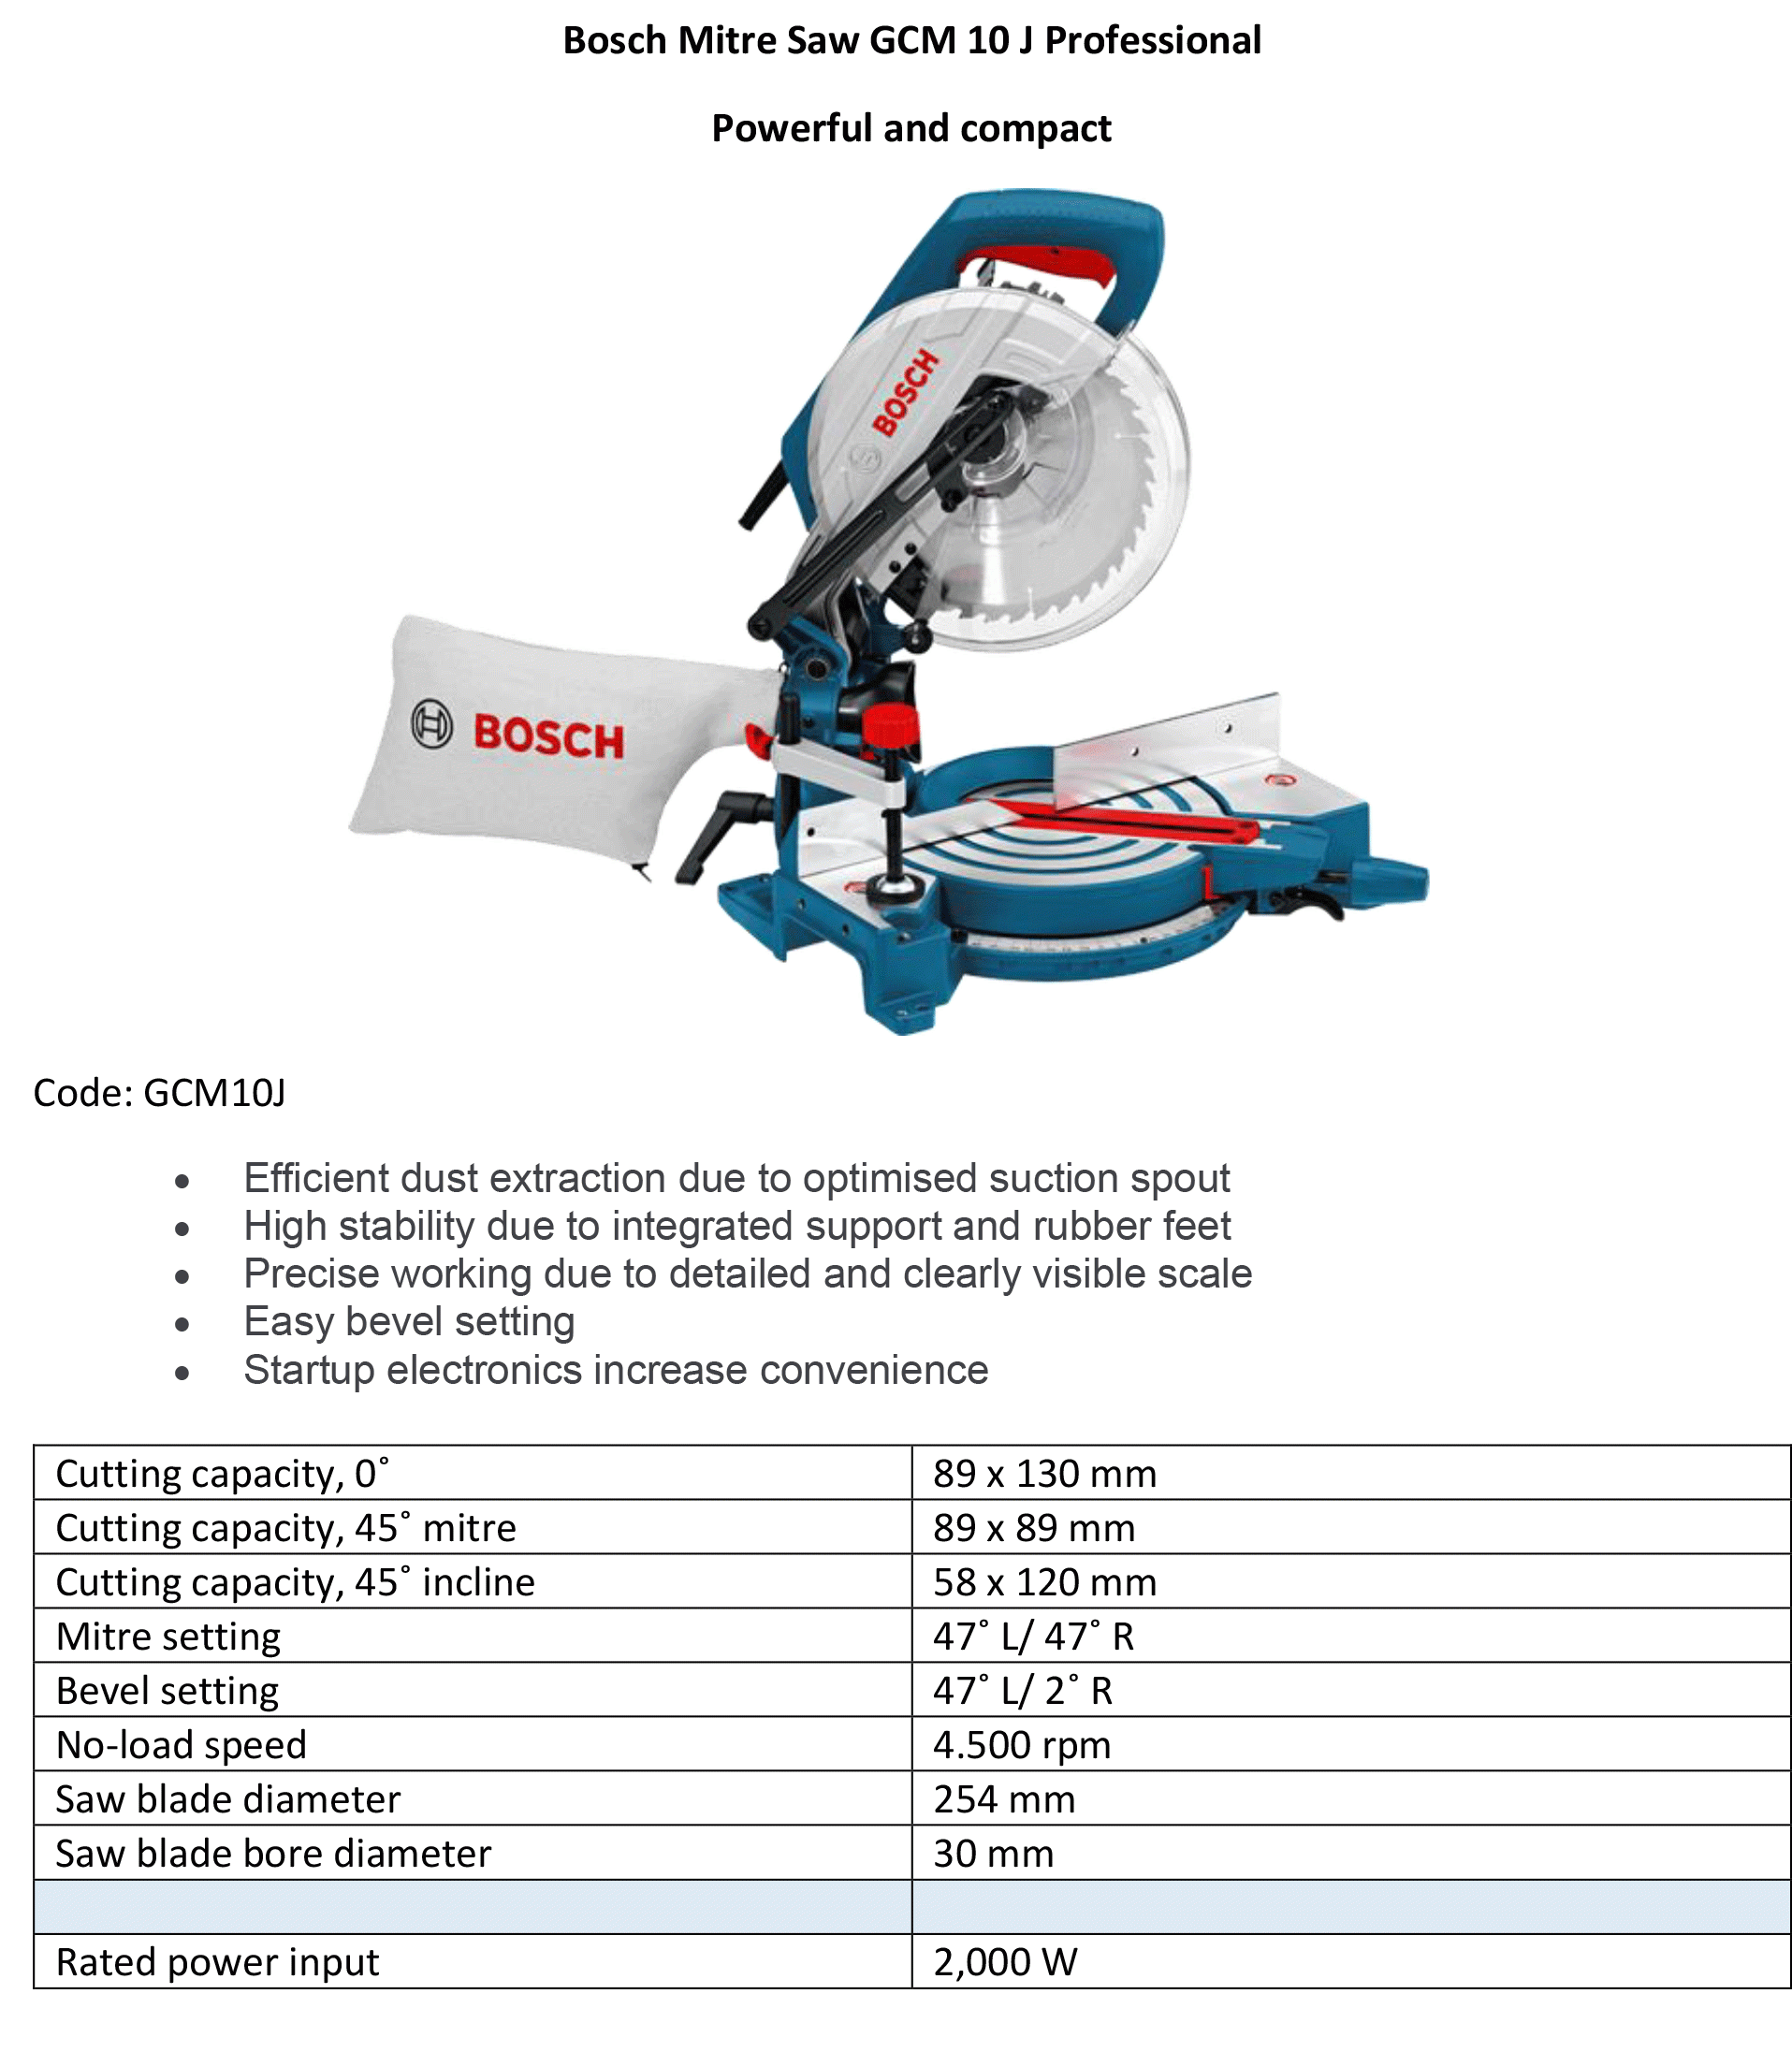 Bosch-Mitre-Saw-GCM-10-J-Professional-in